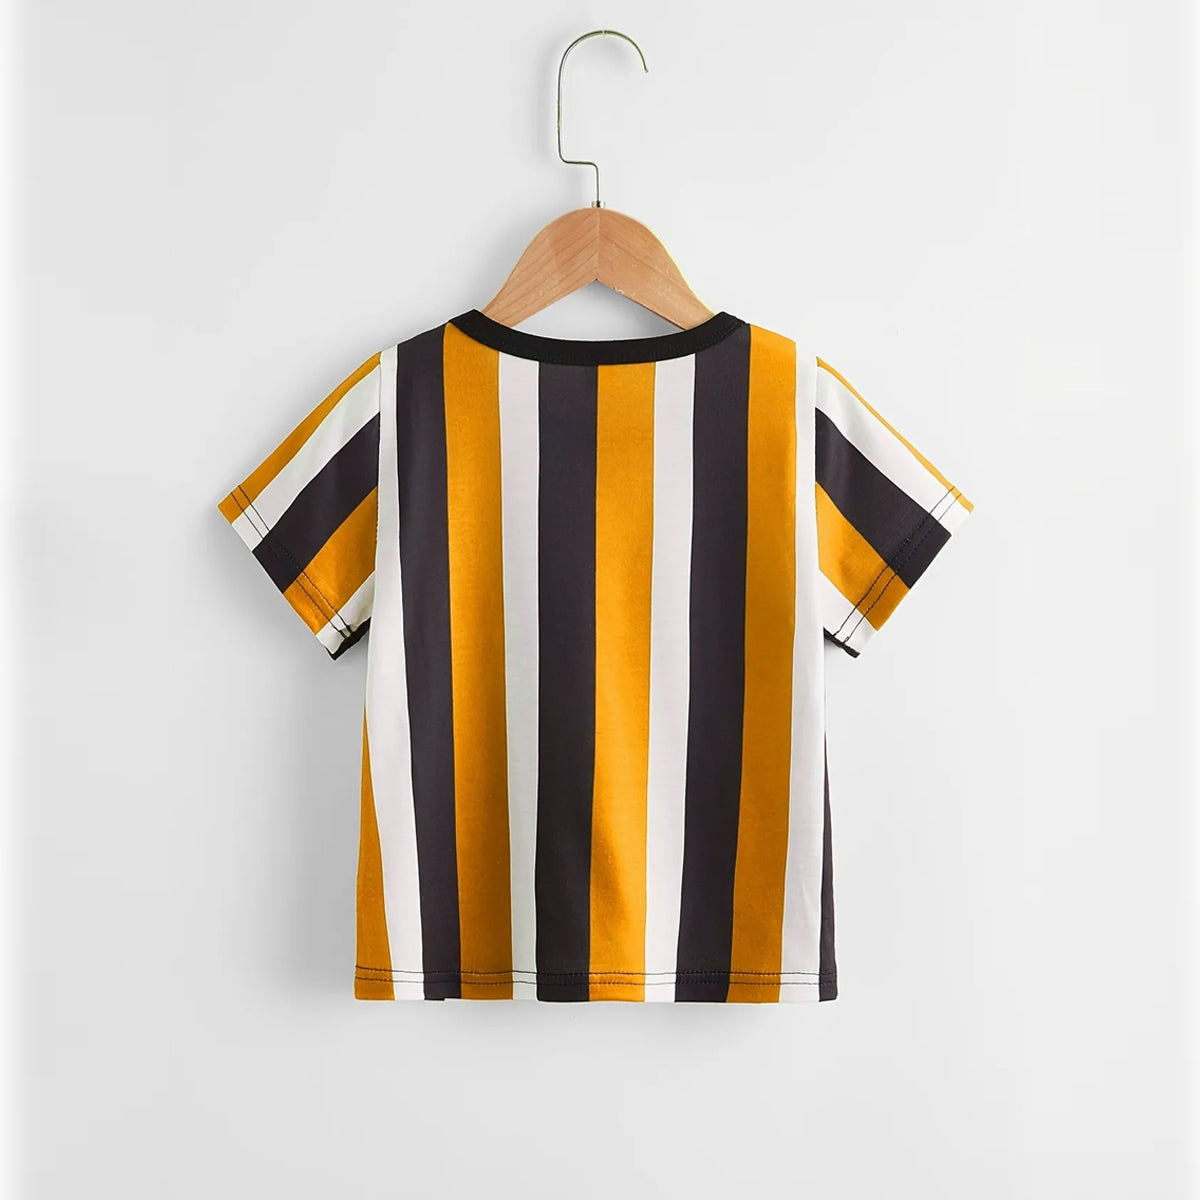 VENUTALOZA Boy's Stripe Color Block Round Neck & Letters Stripe (Combo Pack of 2) T-shirt For Boys & Girls..